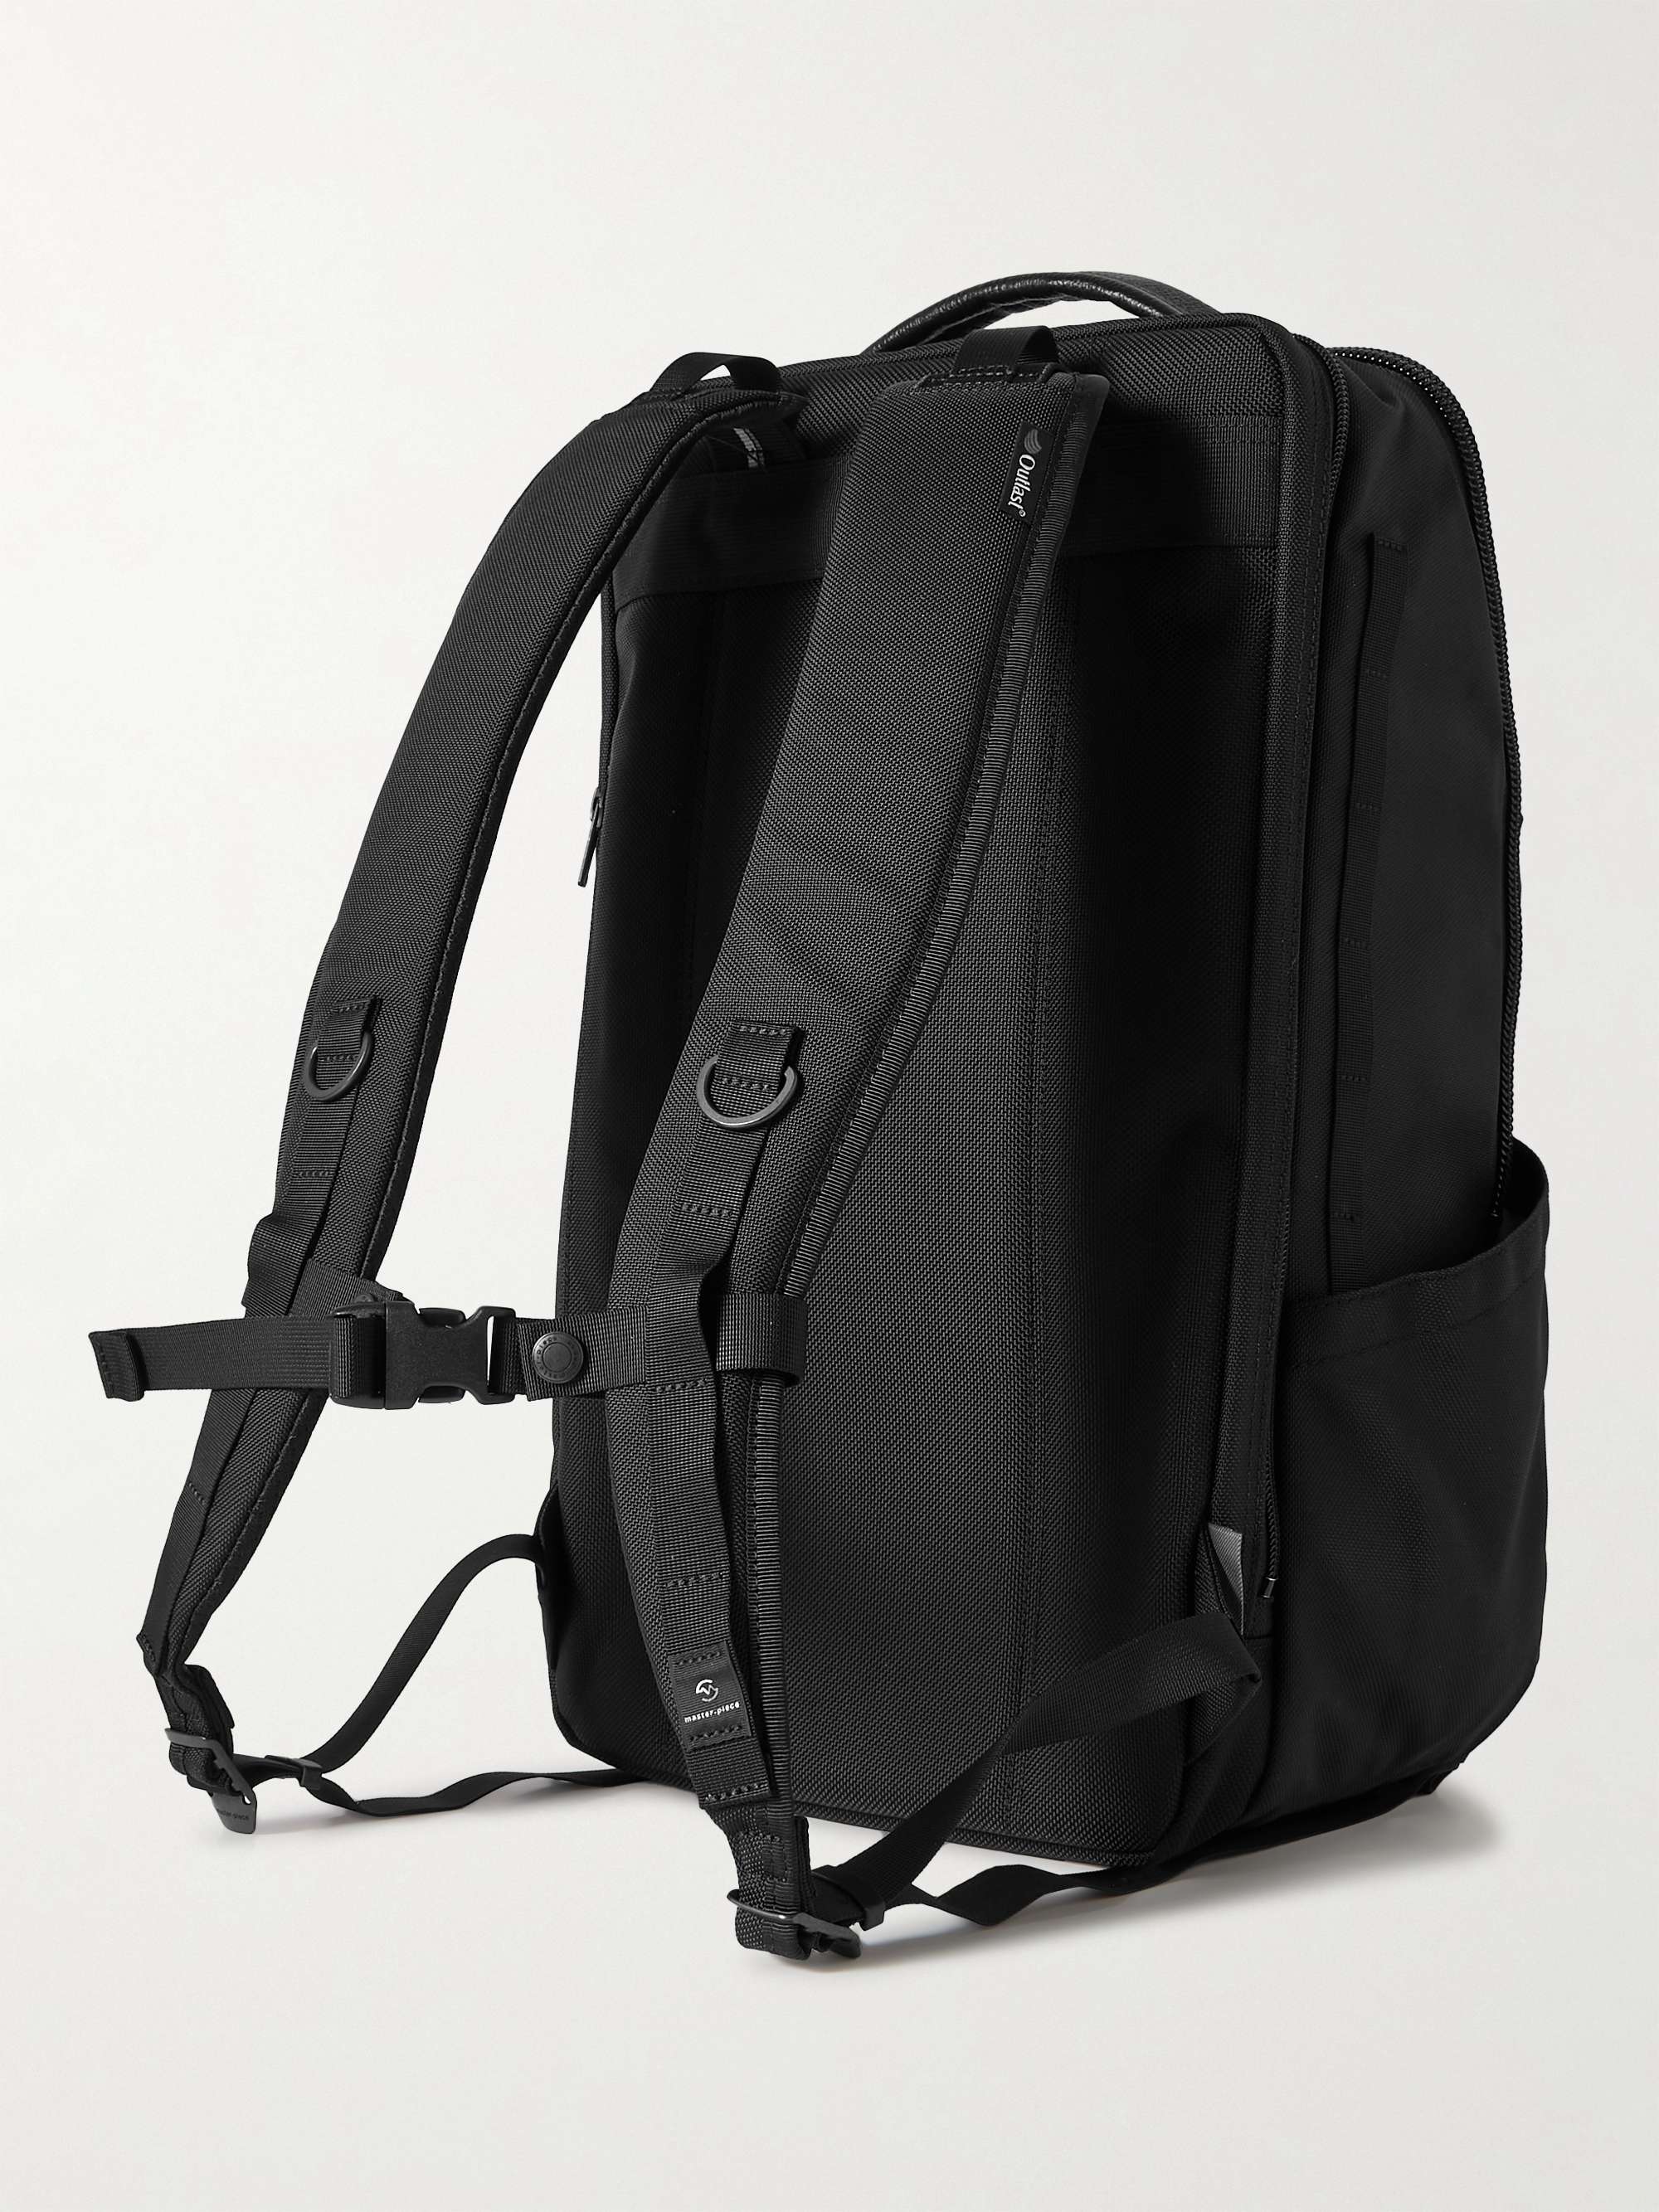 MASTER-PIECE Rise Ver.2 Leather-Trimmed Mastertex-09 Backpack for Men ...